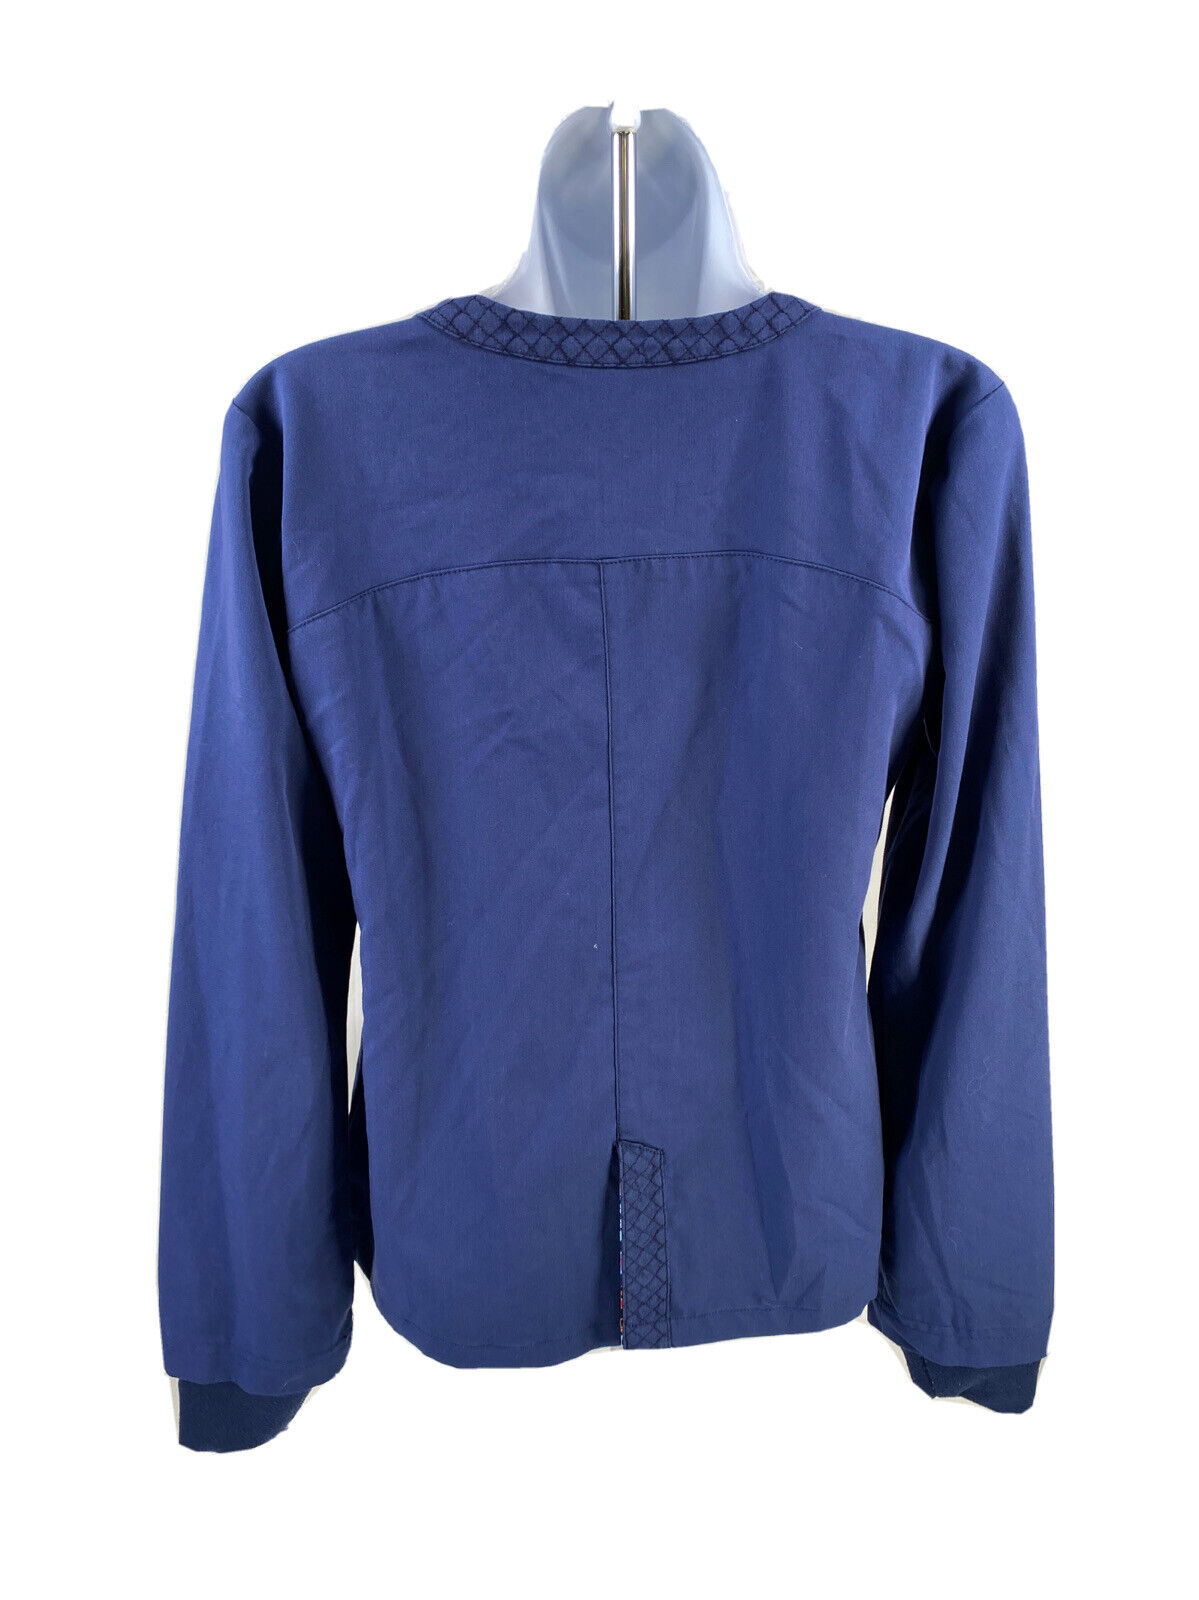 Vera Bradley Women's Navy Blue Full Zip Scrub Top Jacket - XS